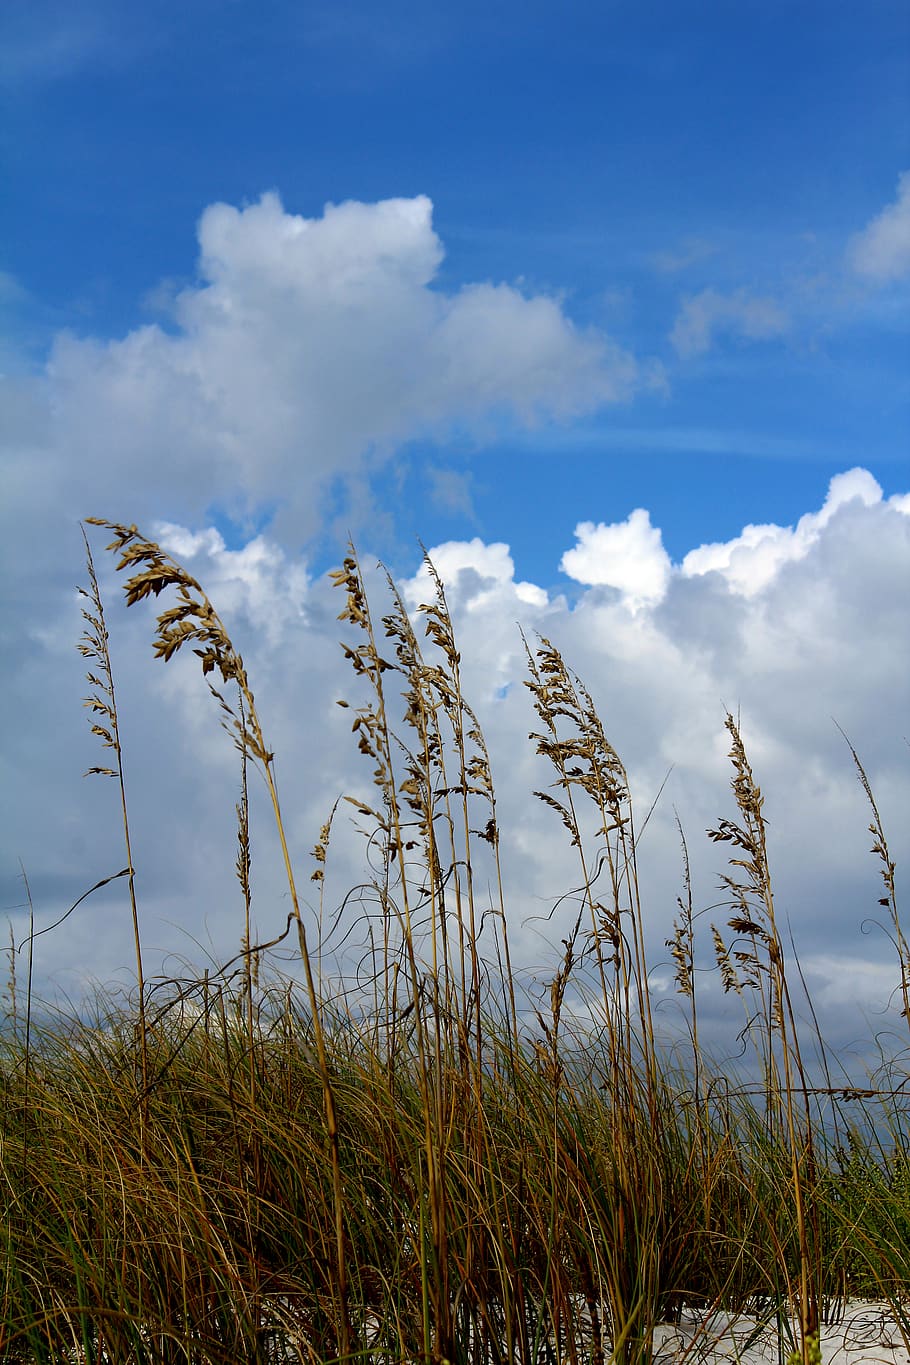 pensacola beach, united states, sea oats, clouds, cloud - sky